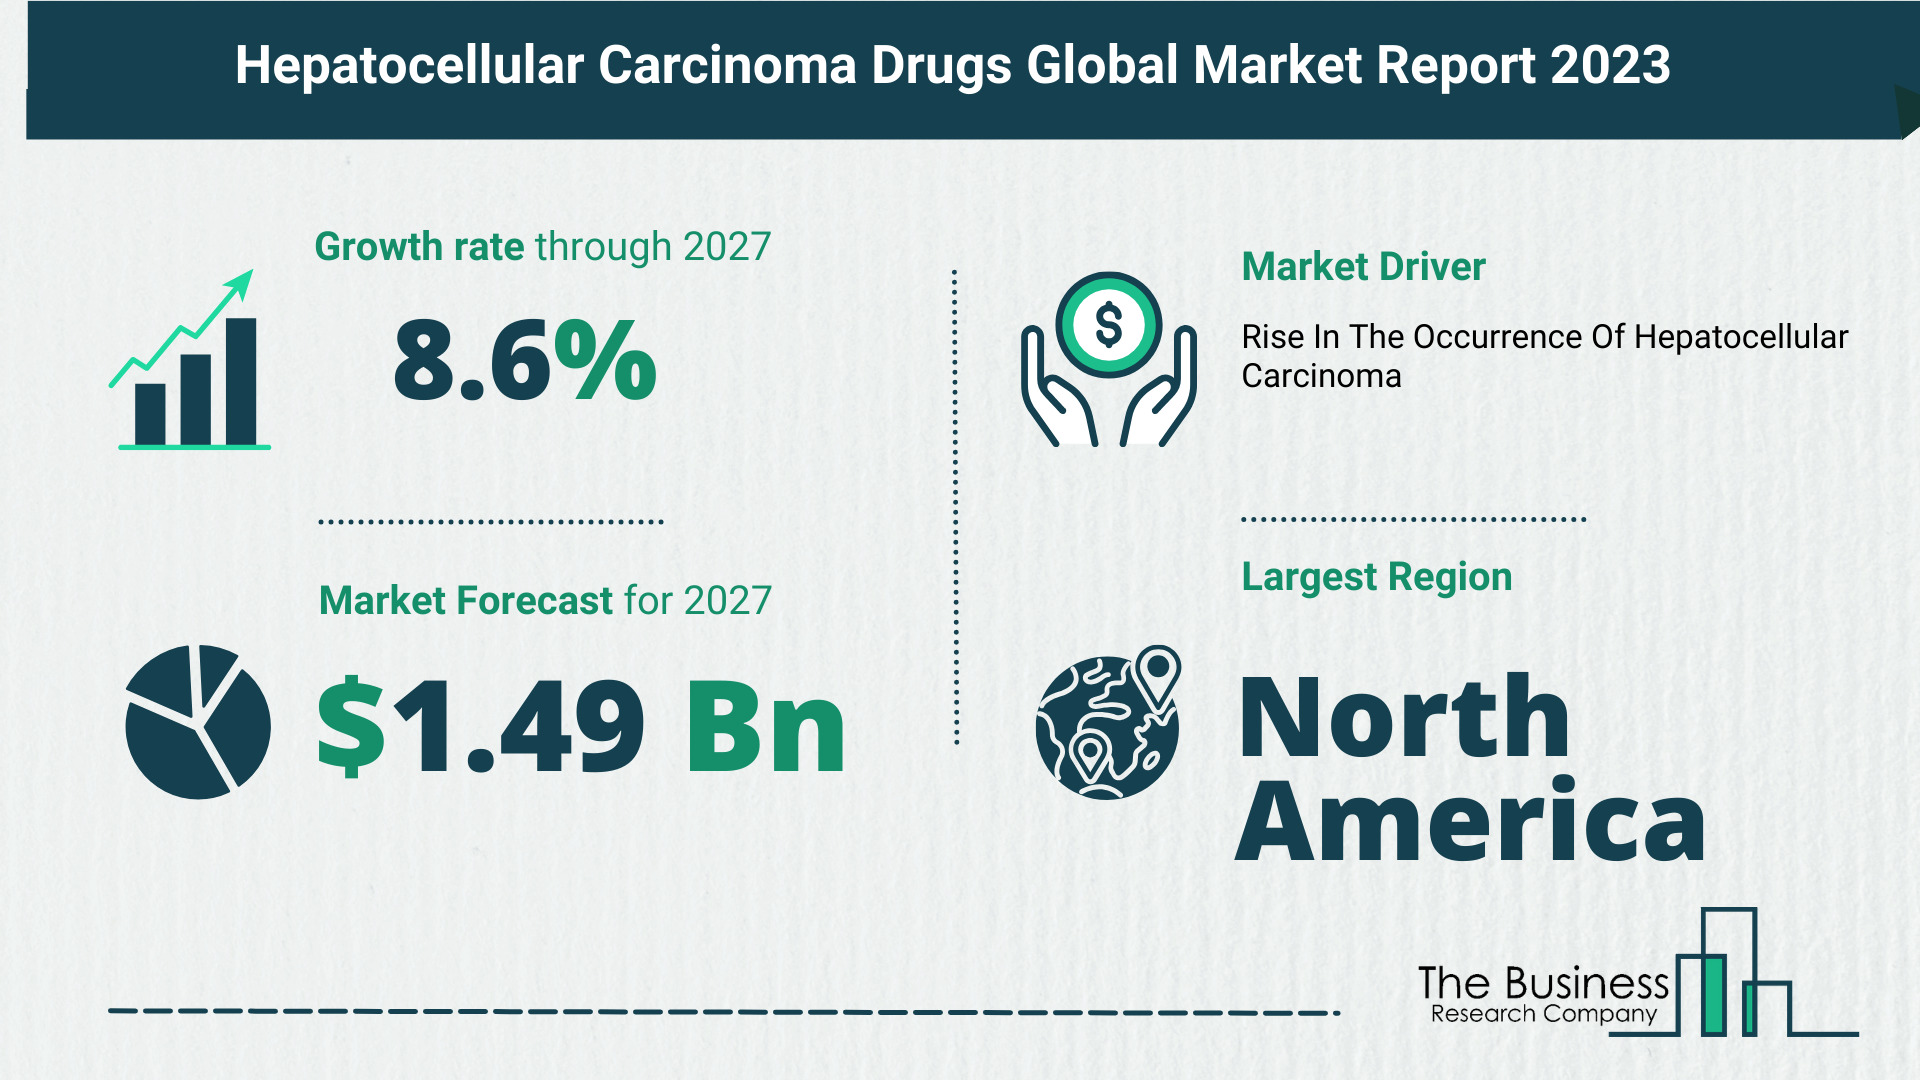 Global Hepatocellular Carcinoma Drugs Market